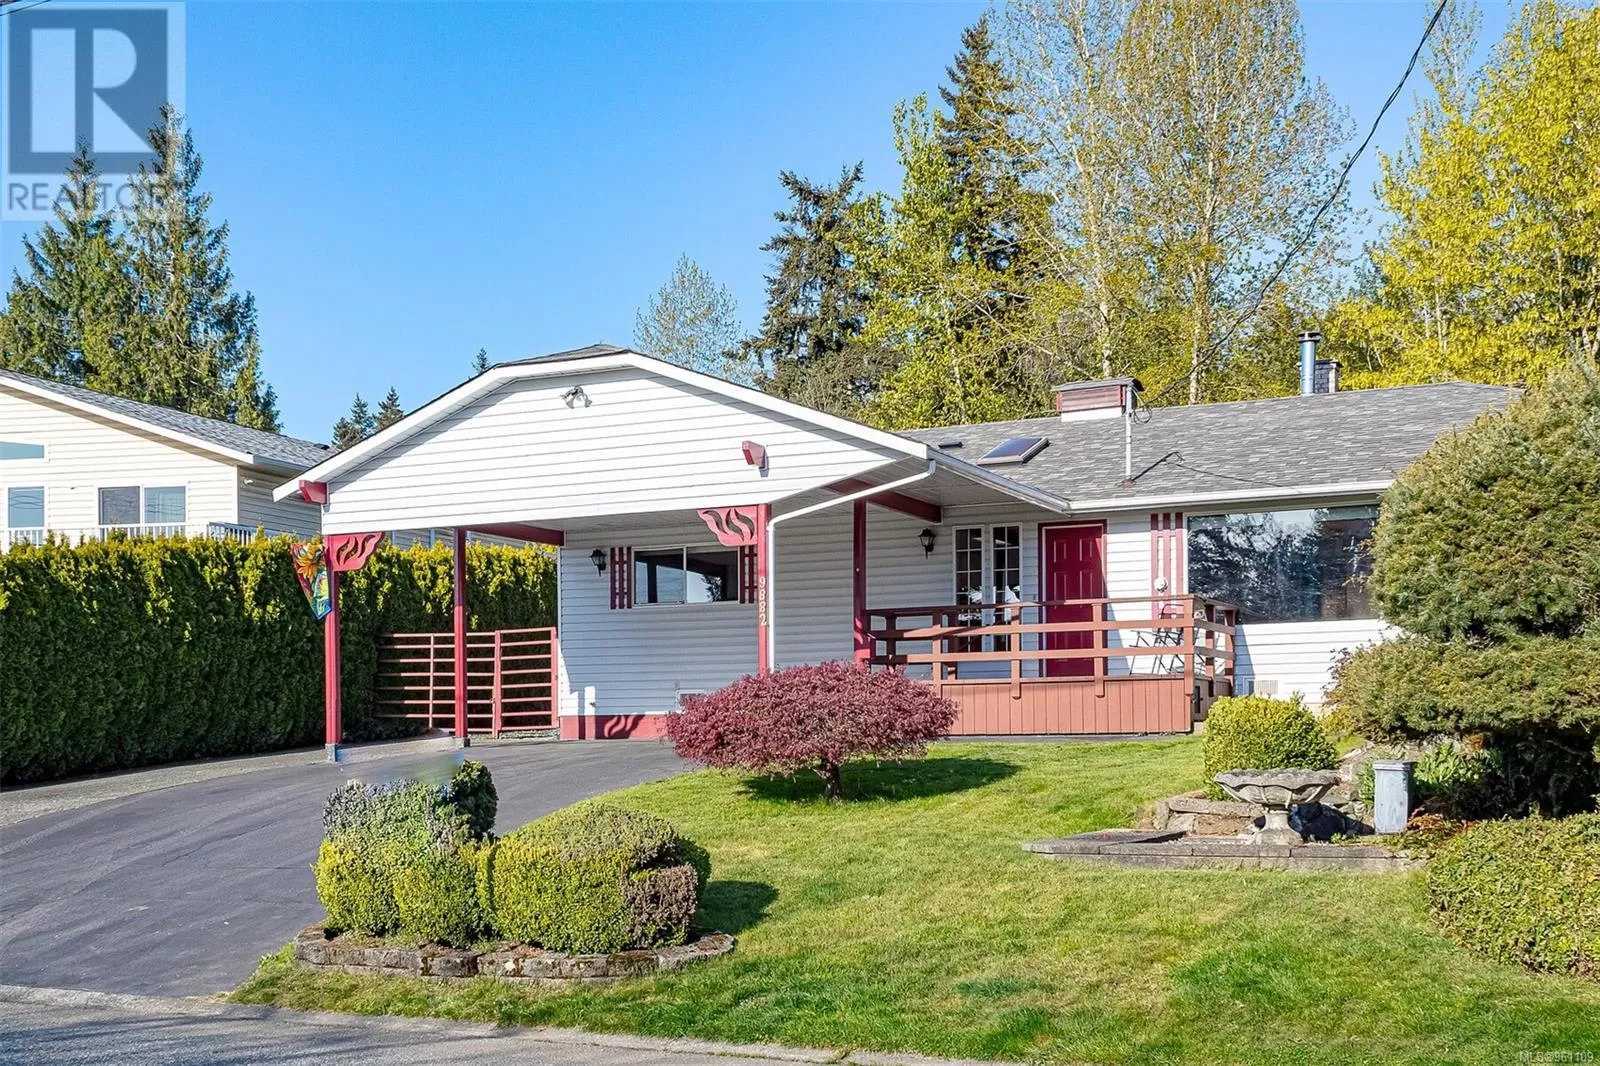 House for rent: 9882 Echo Hts, Chemainus, British Columbia V0R 1K2